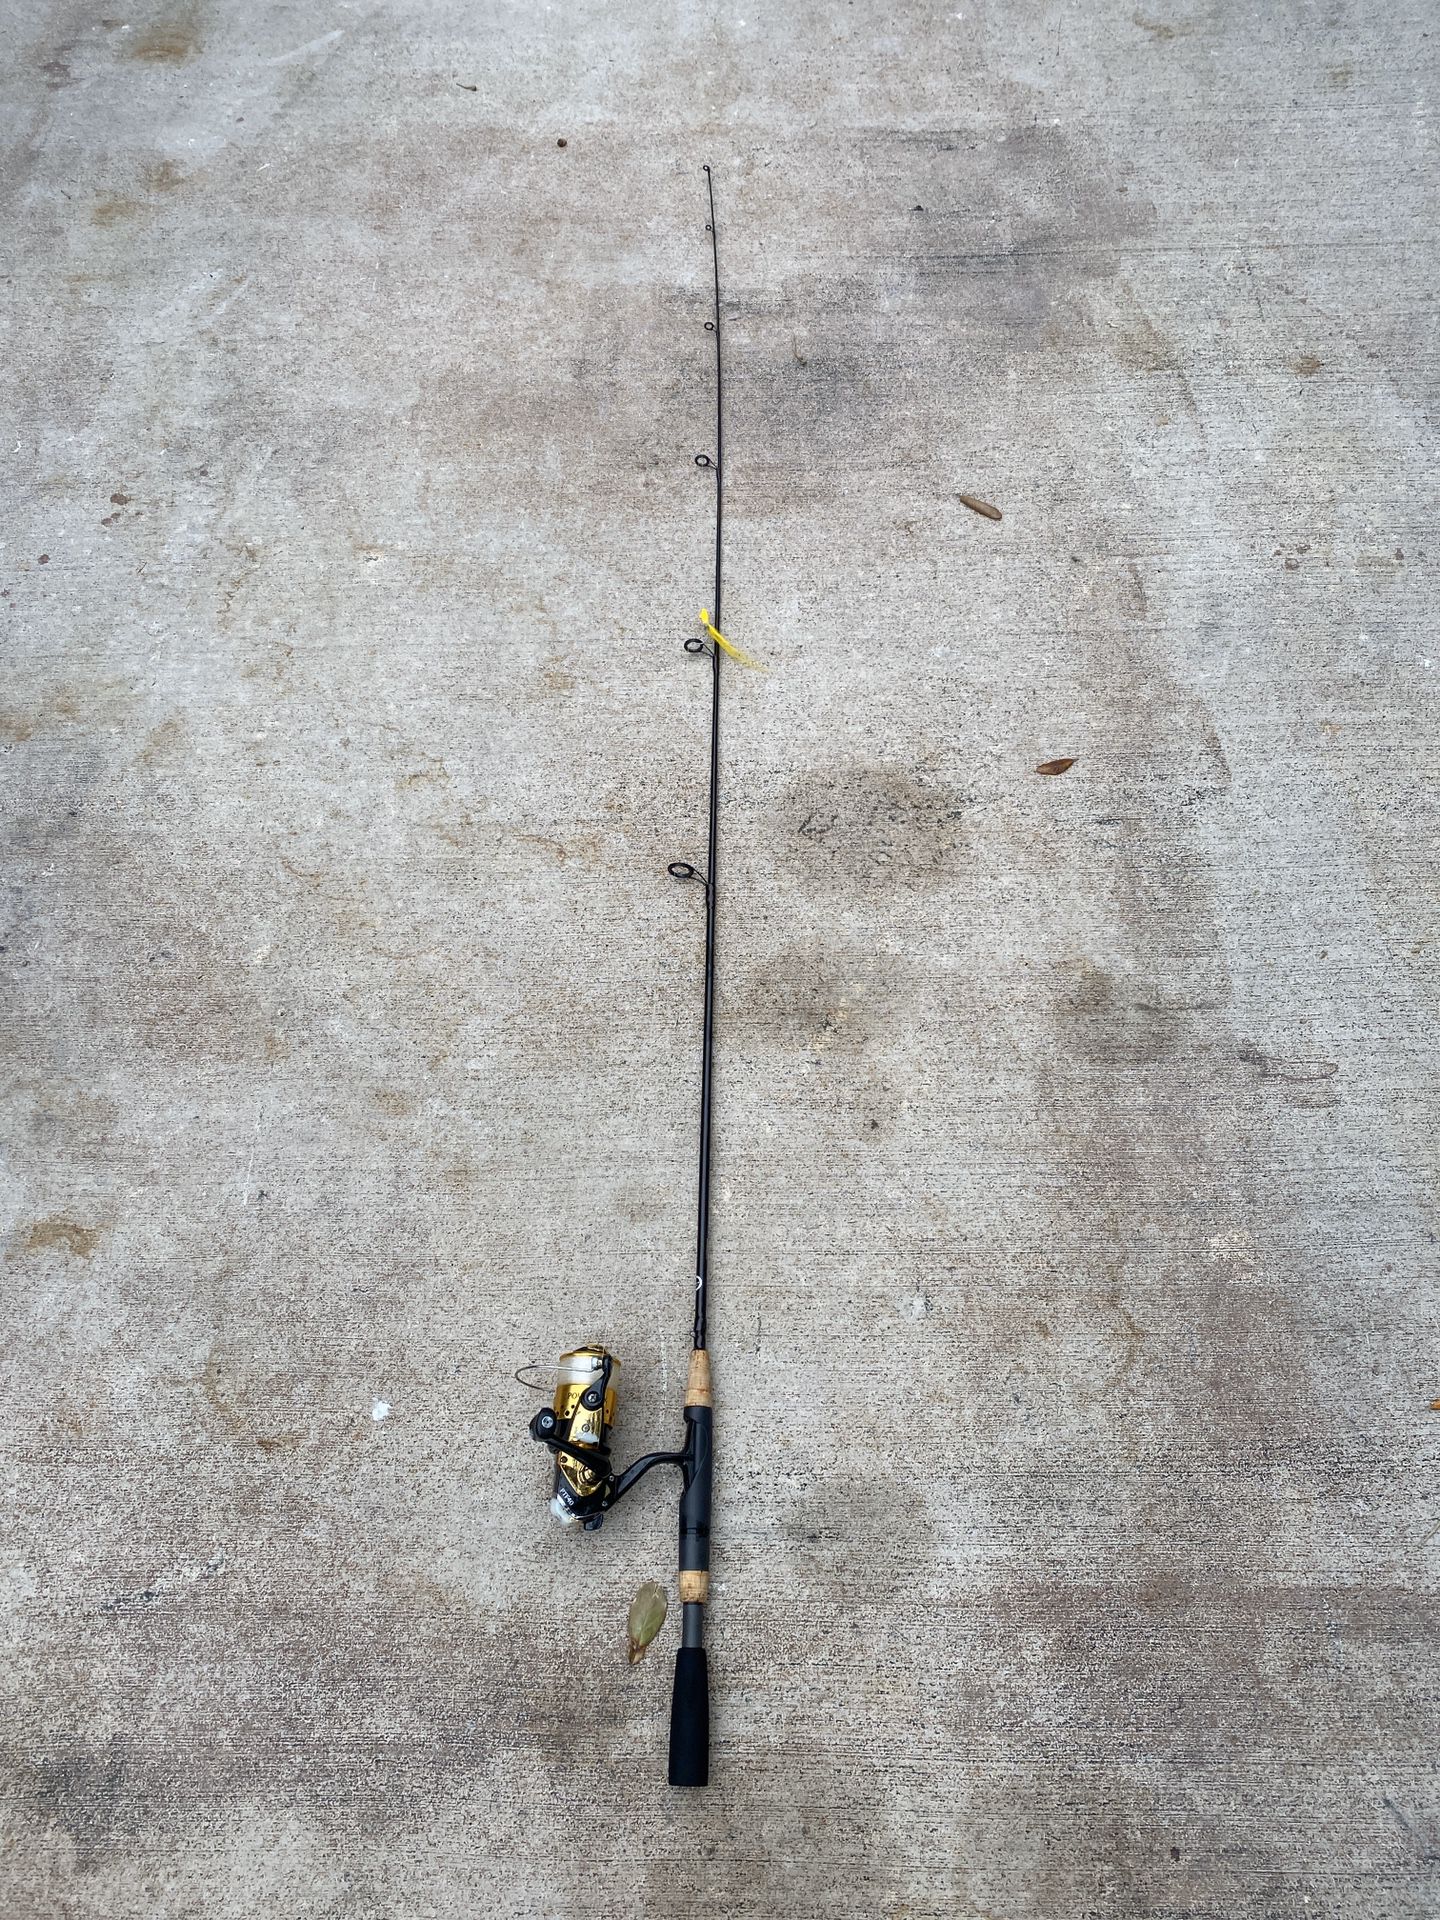 Fishing 🎣 rod and reel combo